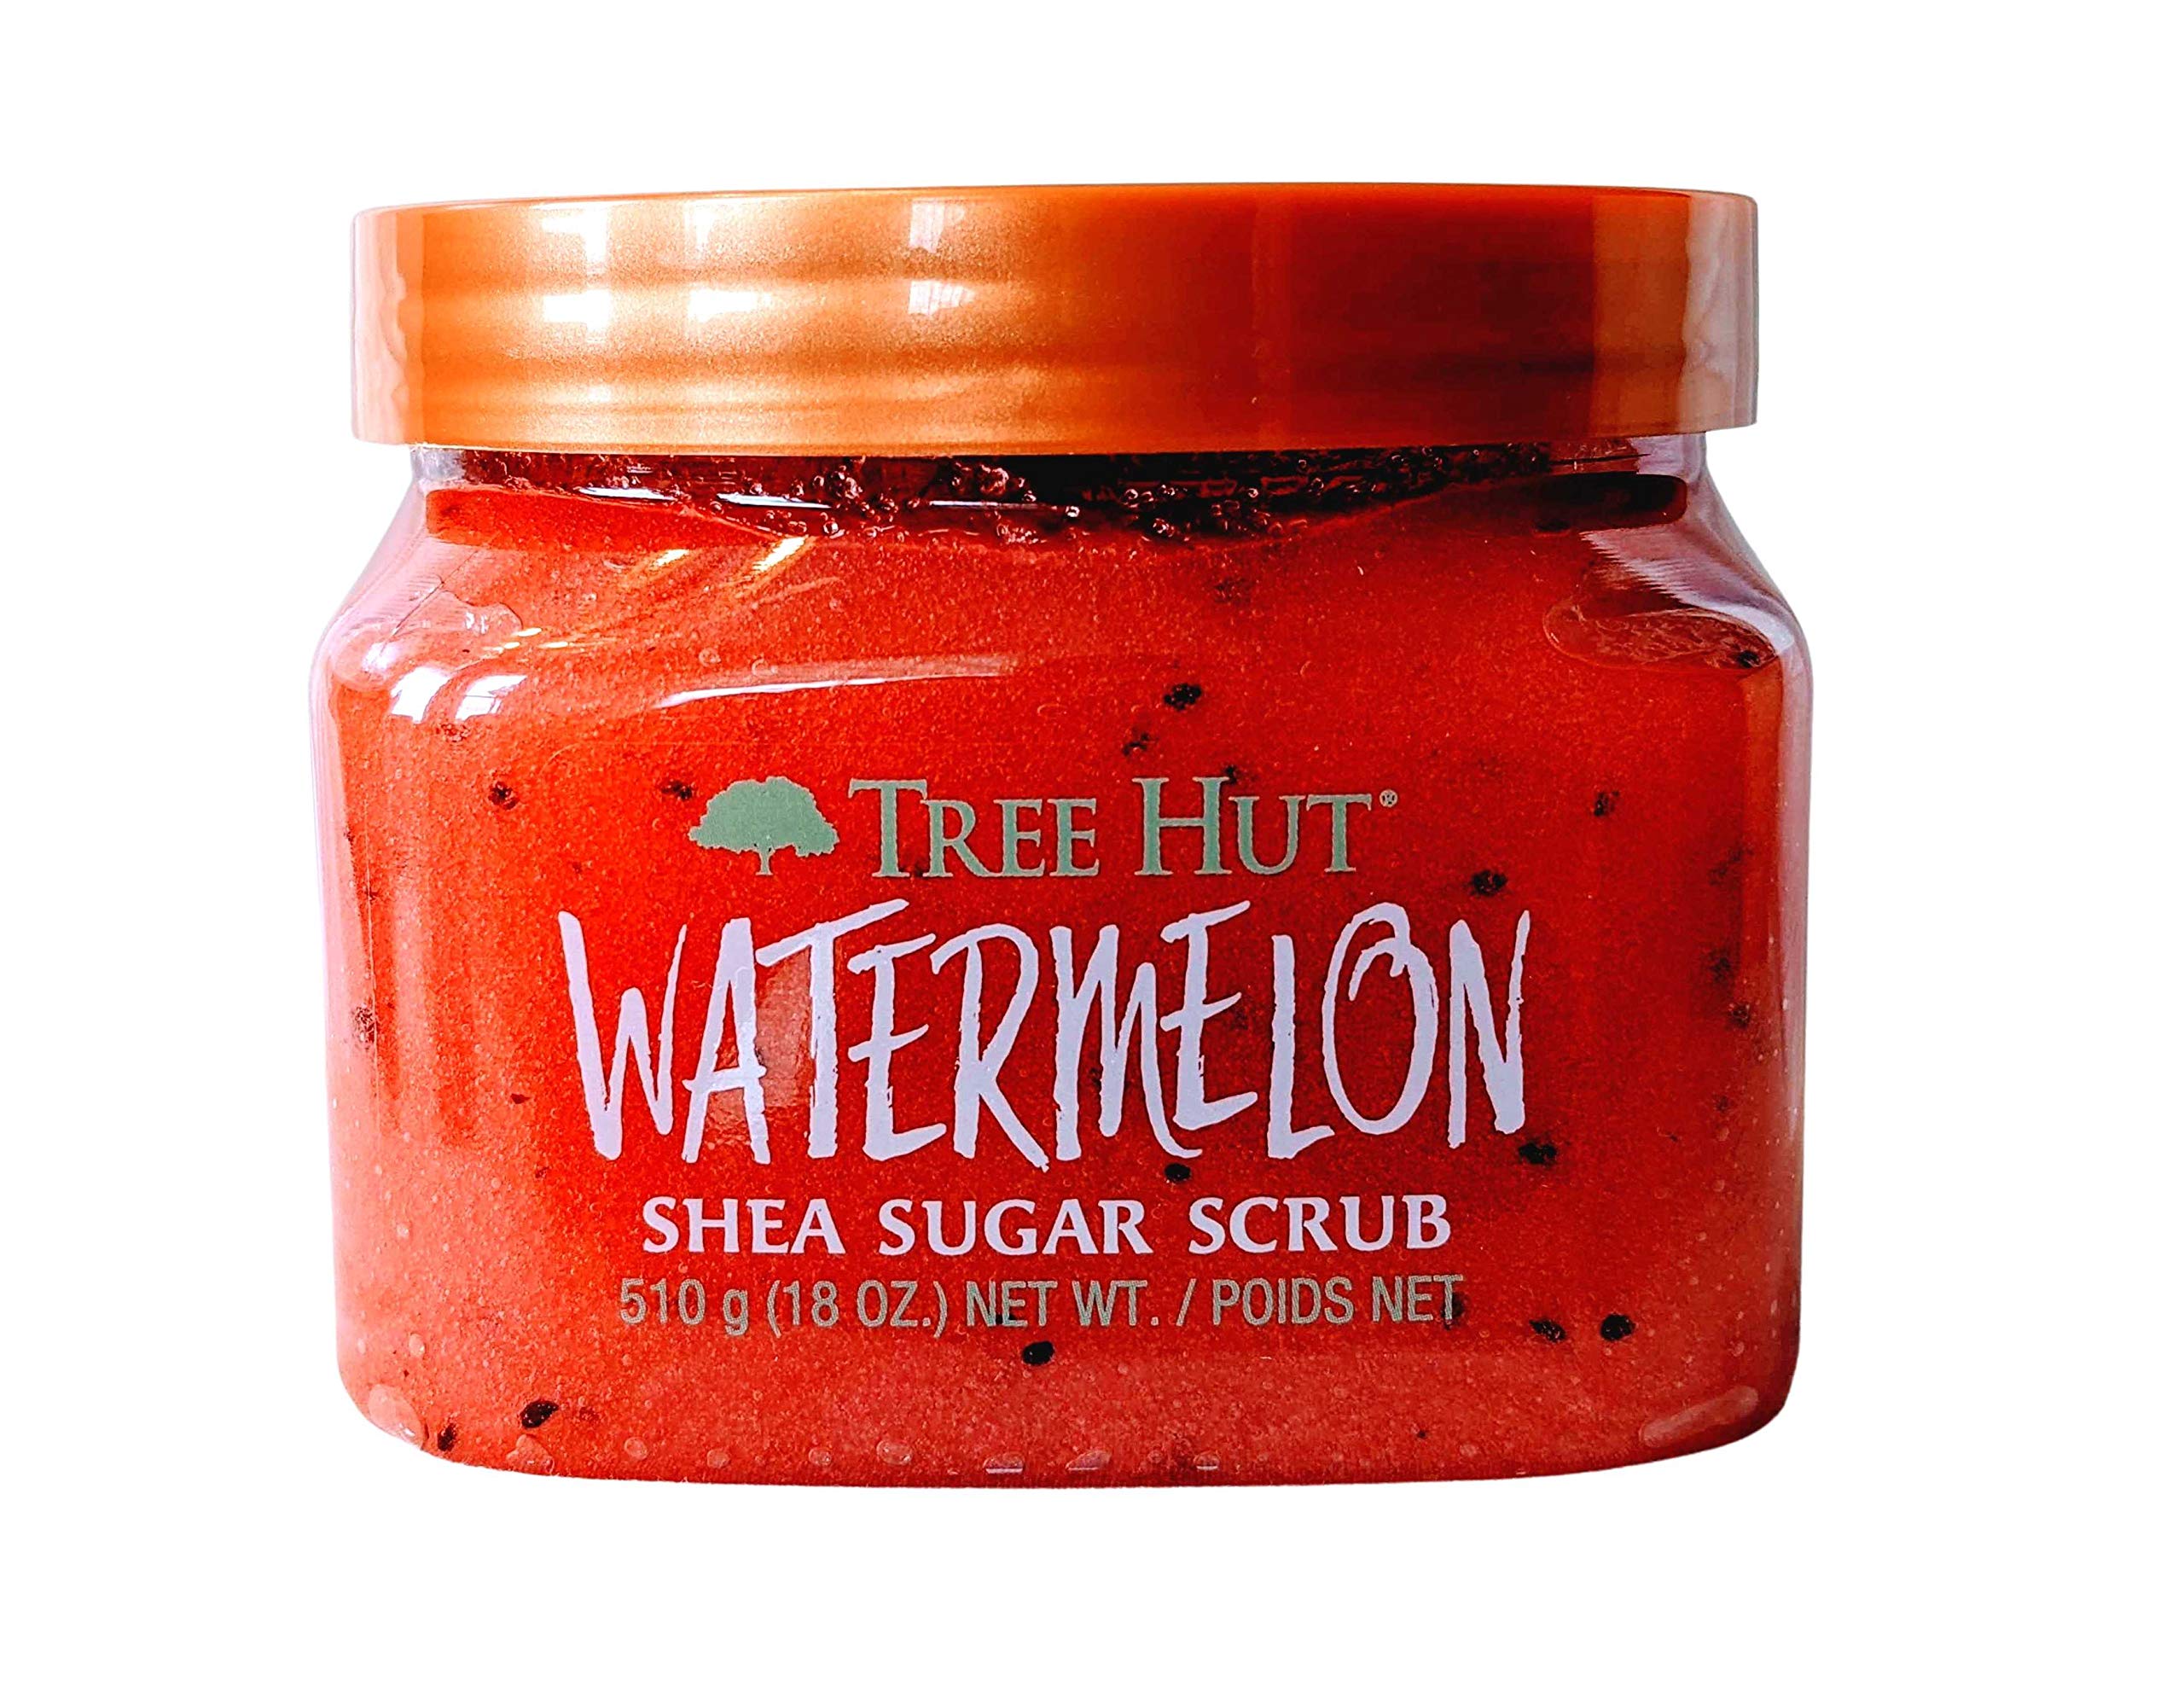 Tree Hut Radiant Skin Watermelon Shea Sugar Scrub Bundled With Watermelon Whipped Shea Body Butter